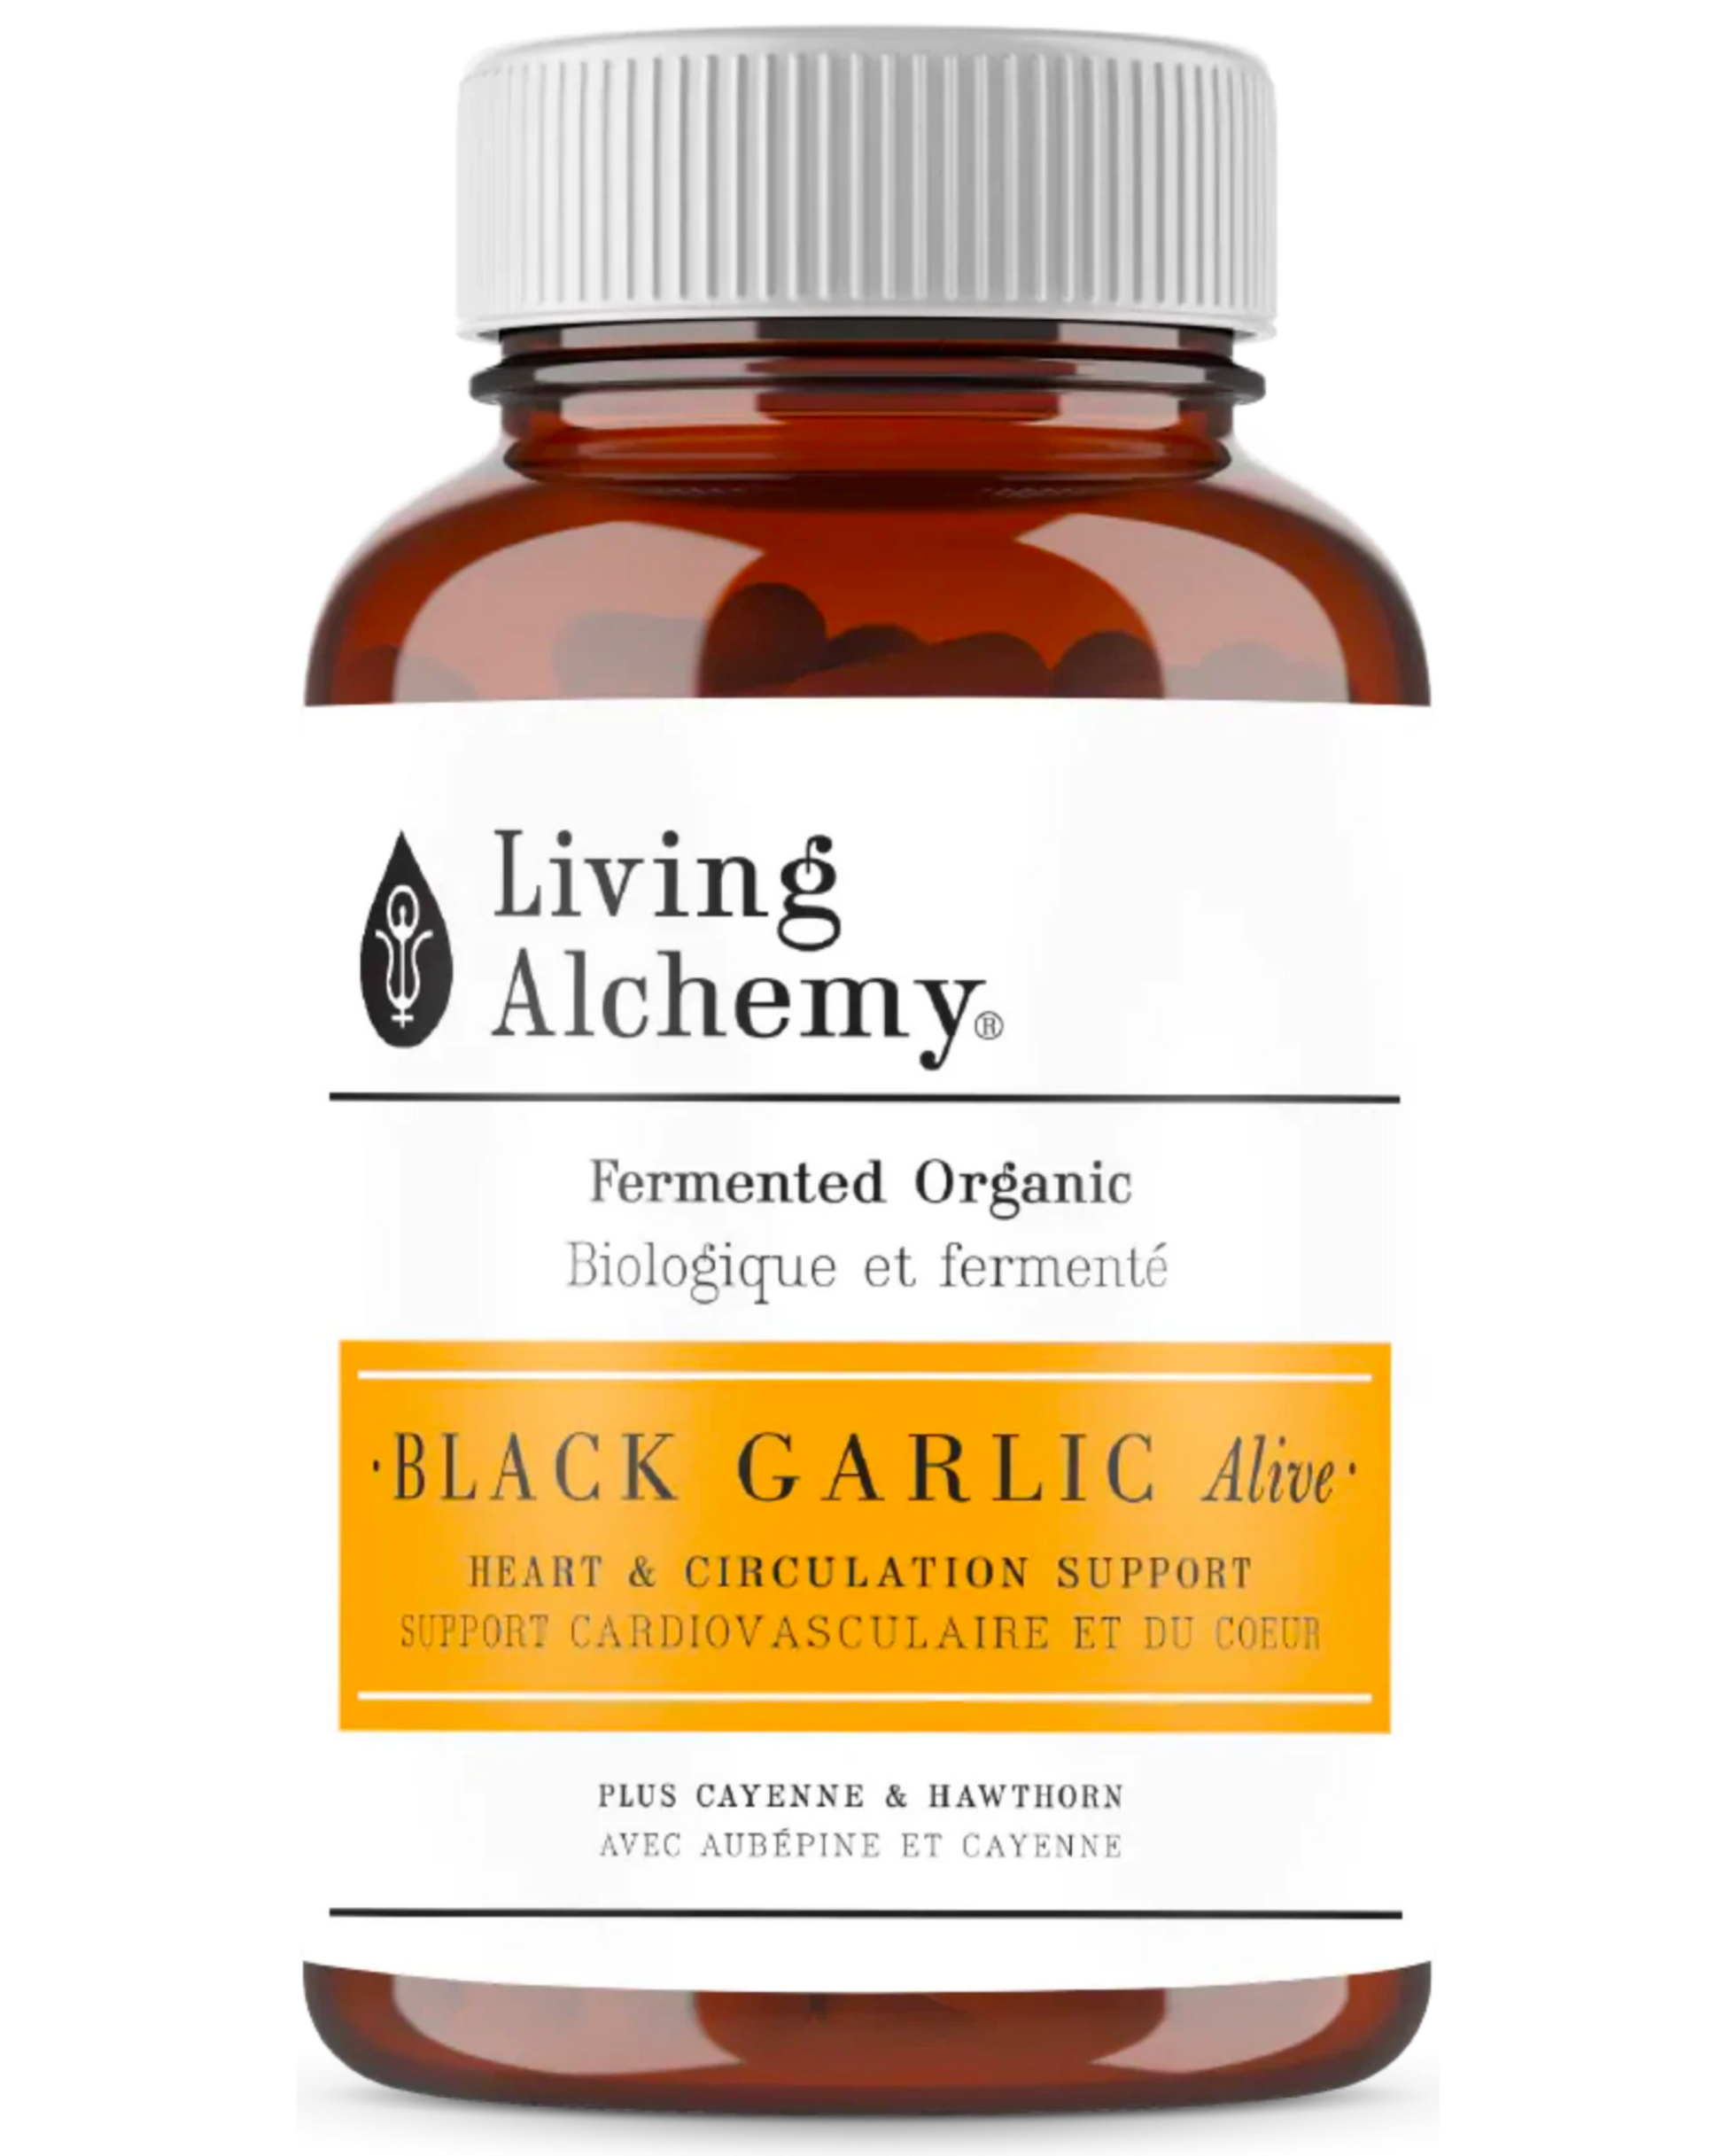 A bottle of Living Alchemy Black Garlic